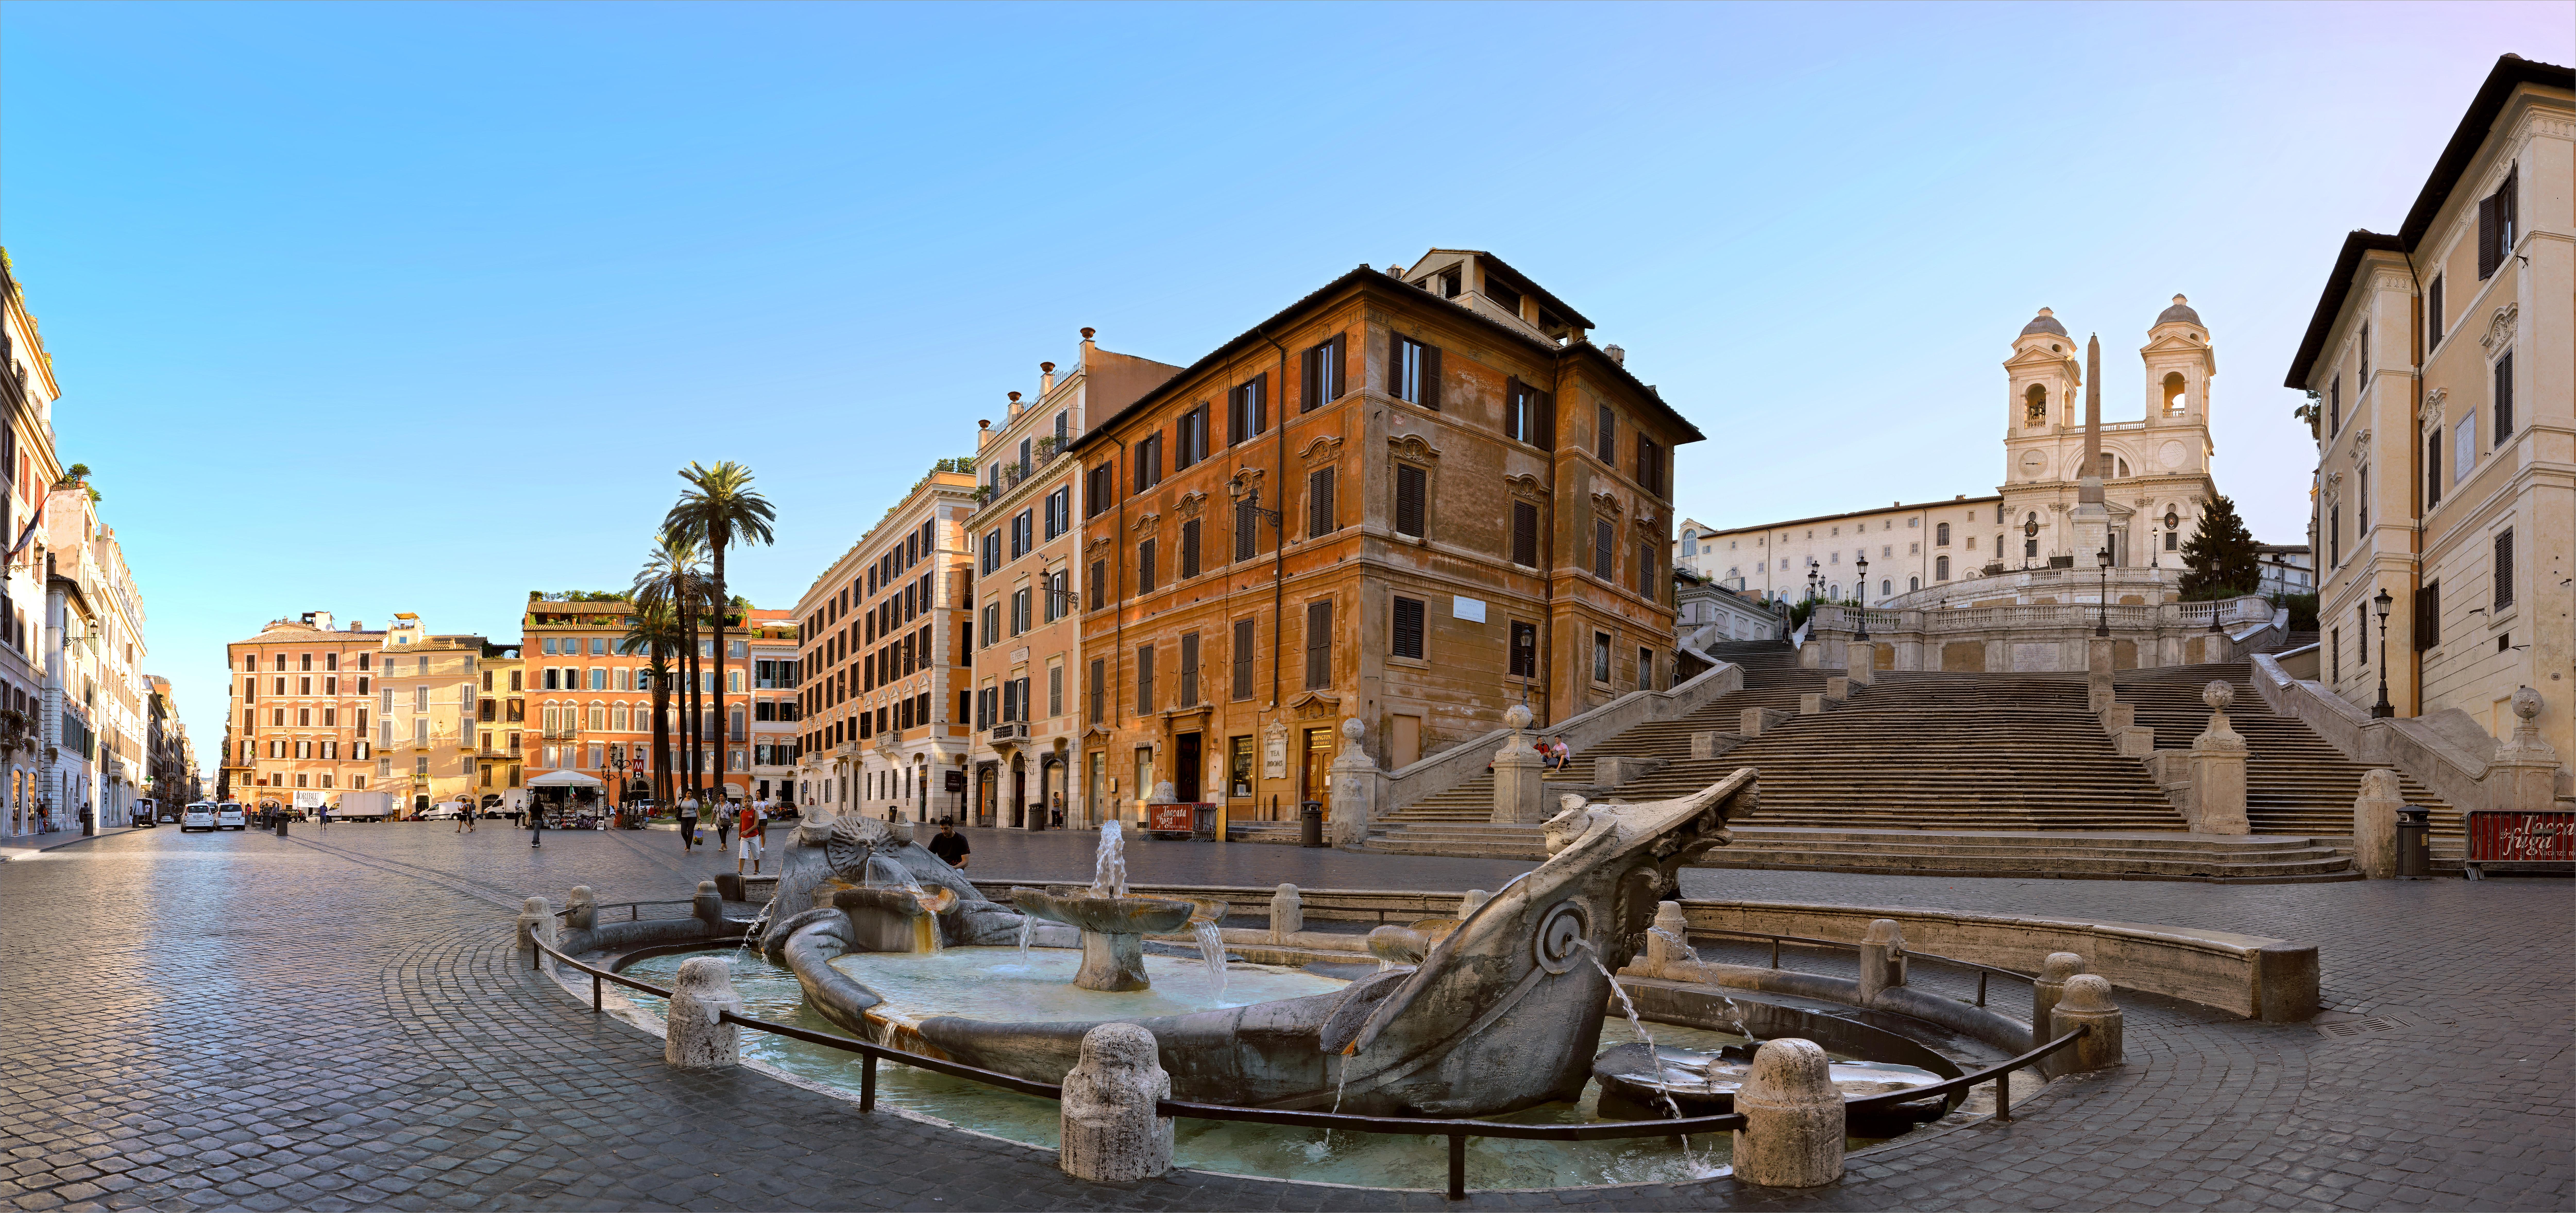 La Piazza di Spagna, Rome, Italie  - Photographie couleur Panoramic contemporaine